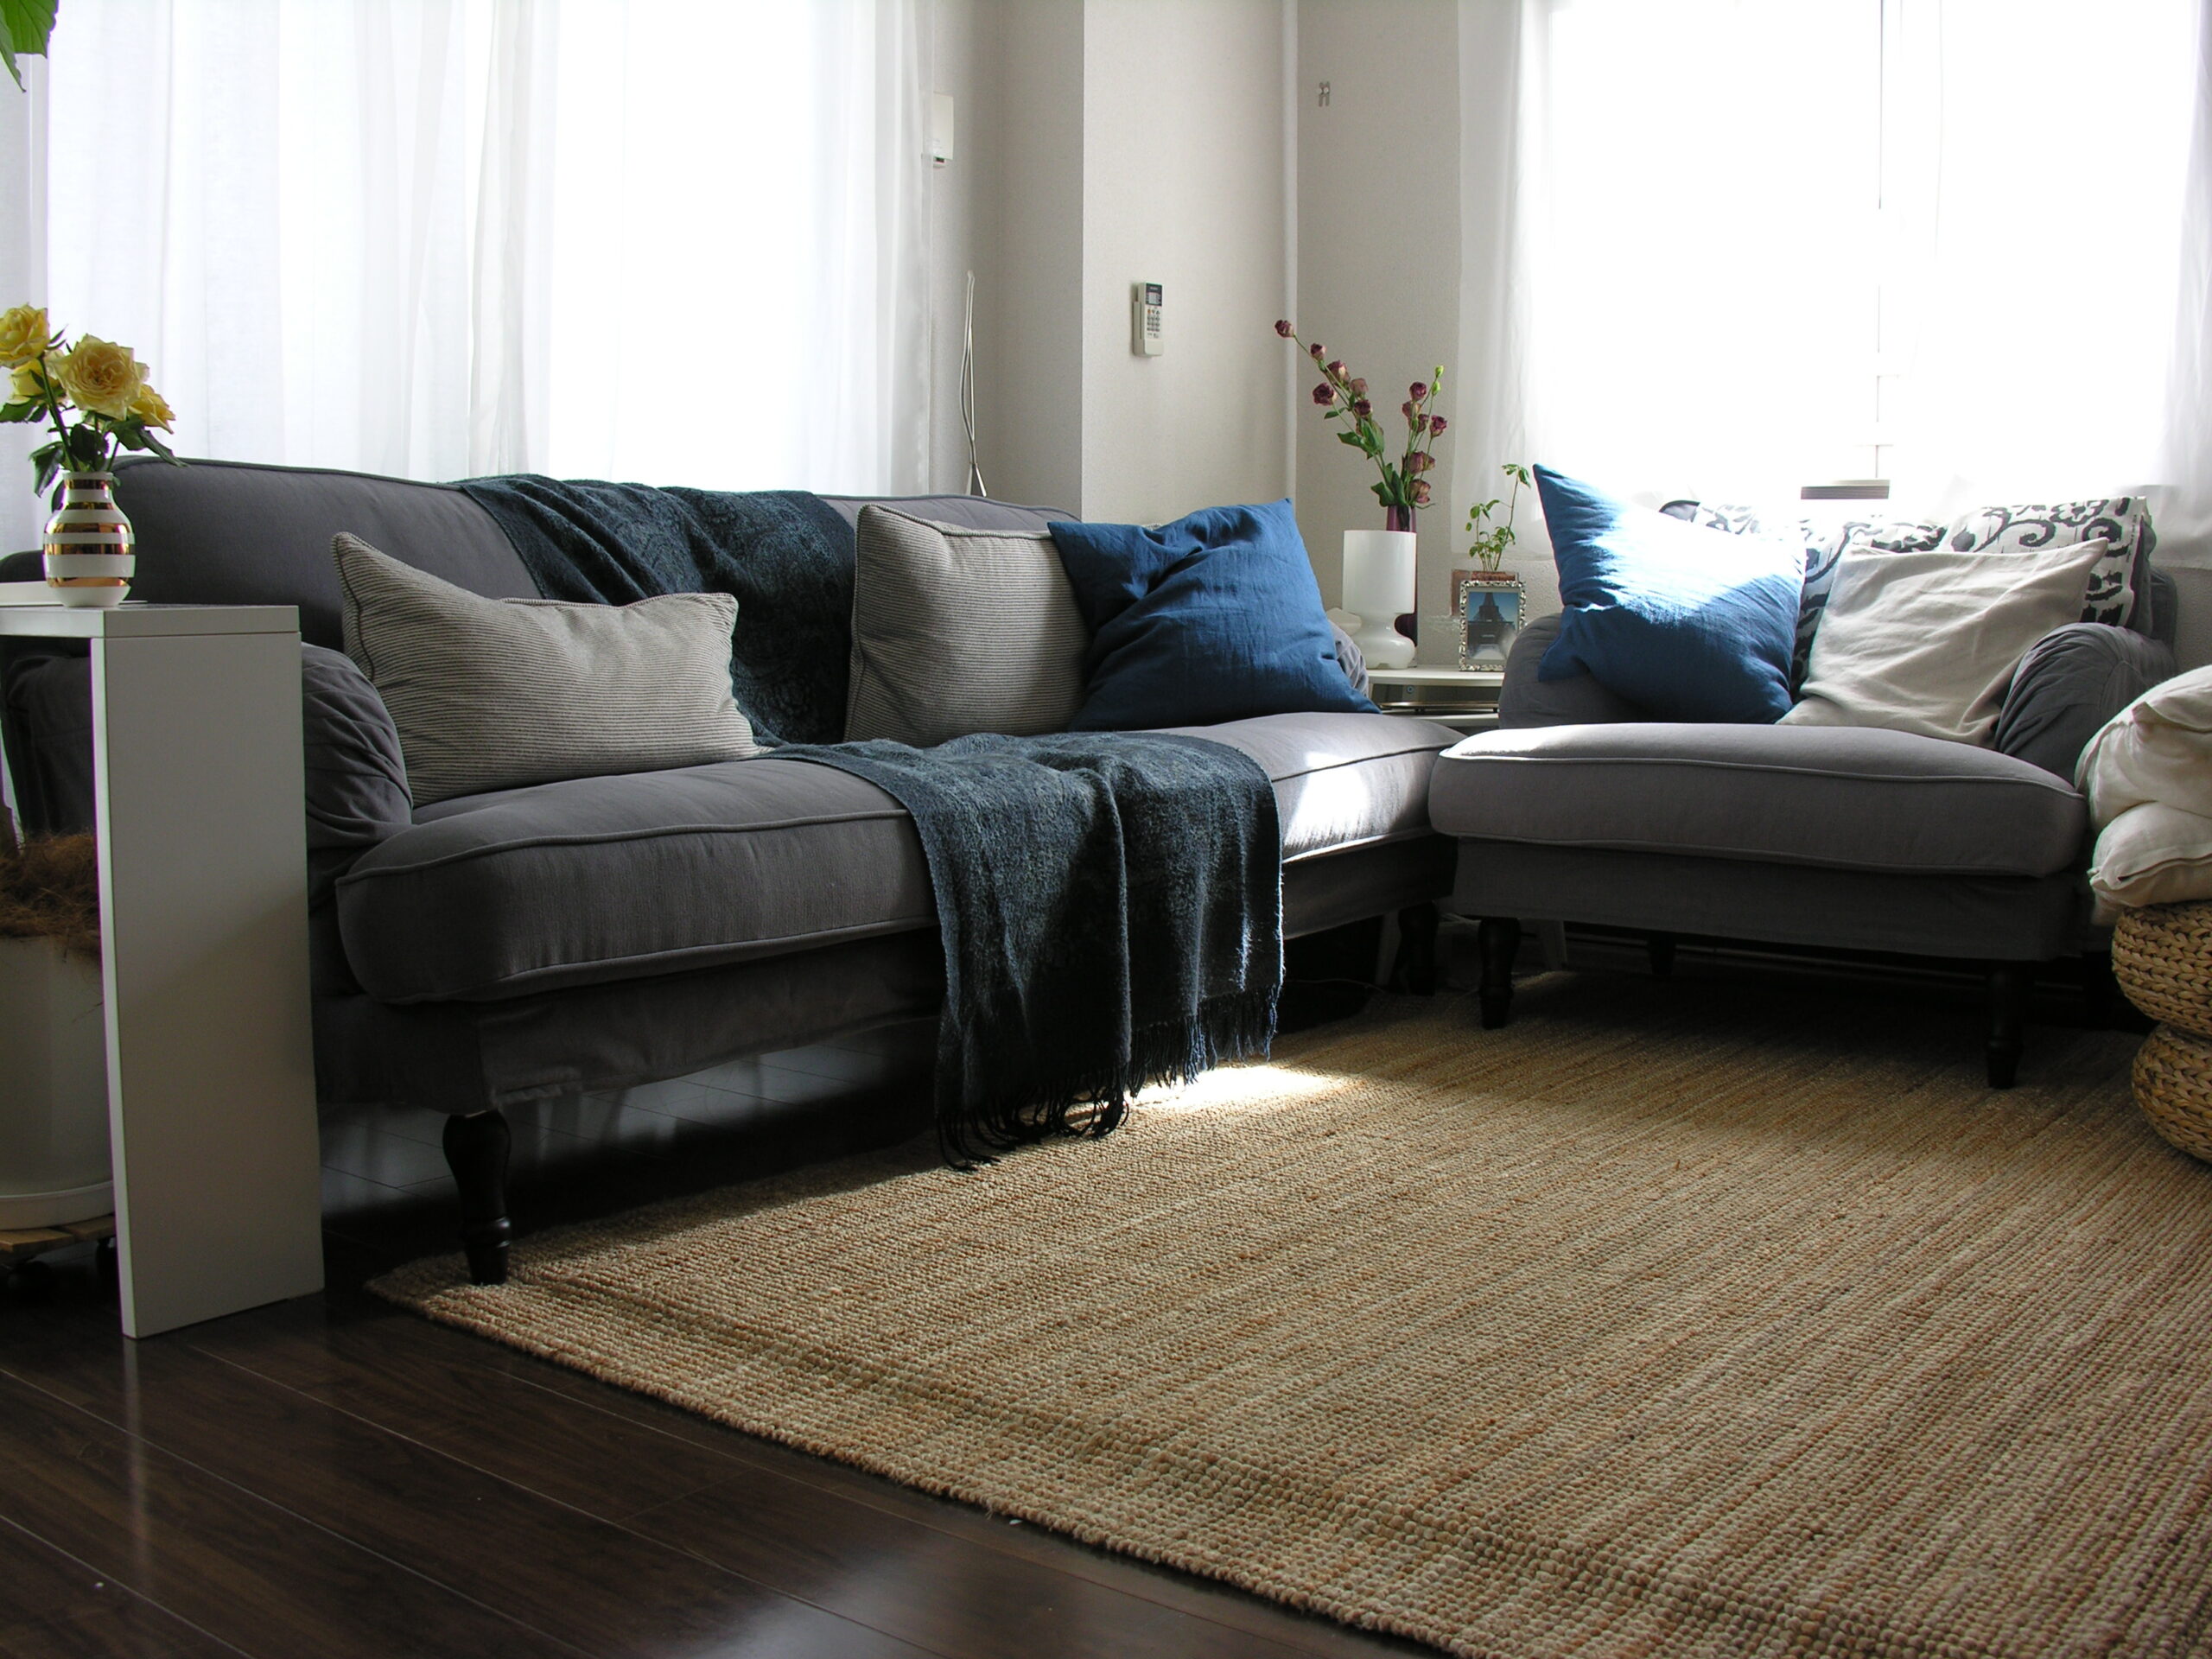 IKEA】1人掛けソファ追加購入してソファの悩みを解決しました | PLANNING